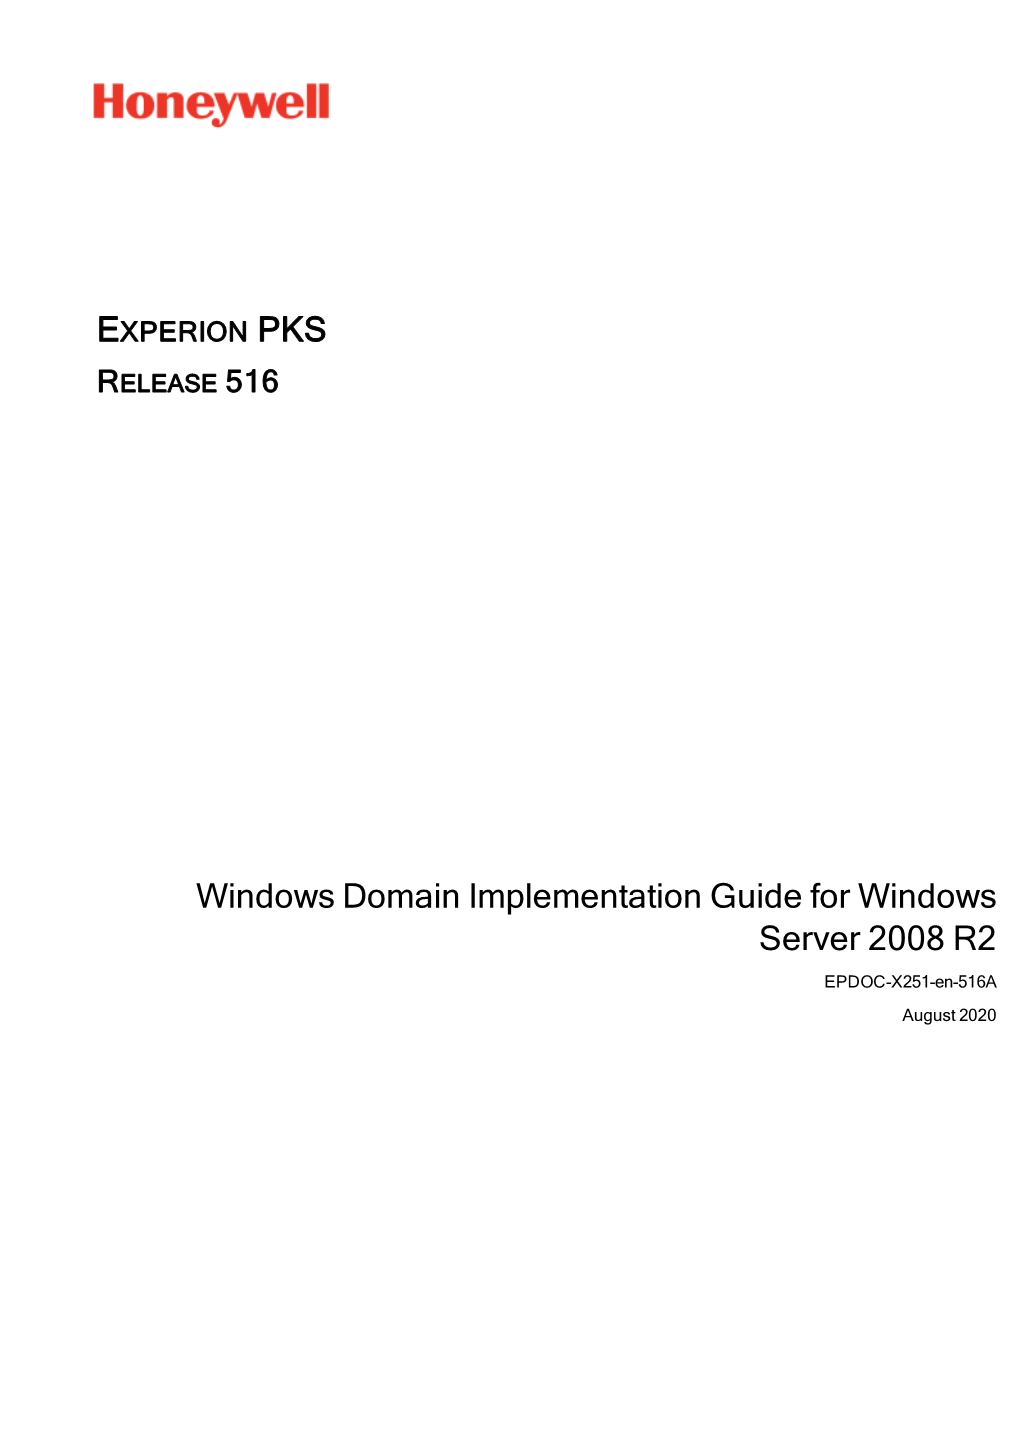 Windows Domain Implementation Guide for Windows Server 2008 R2